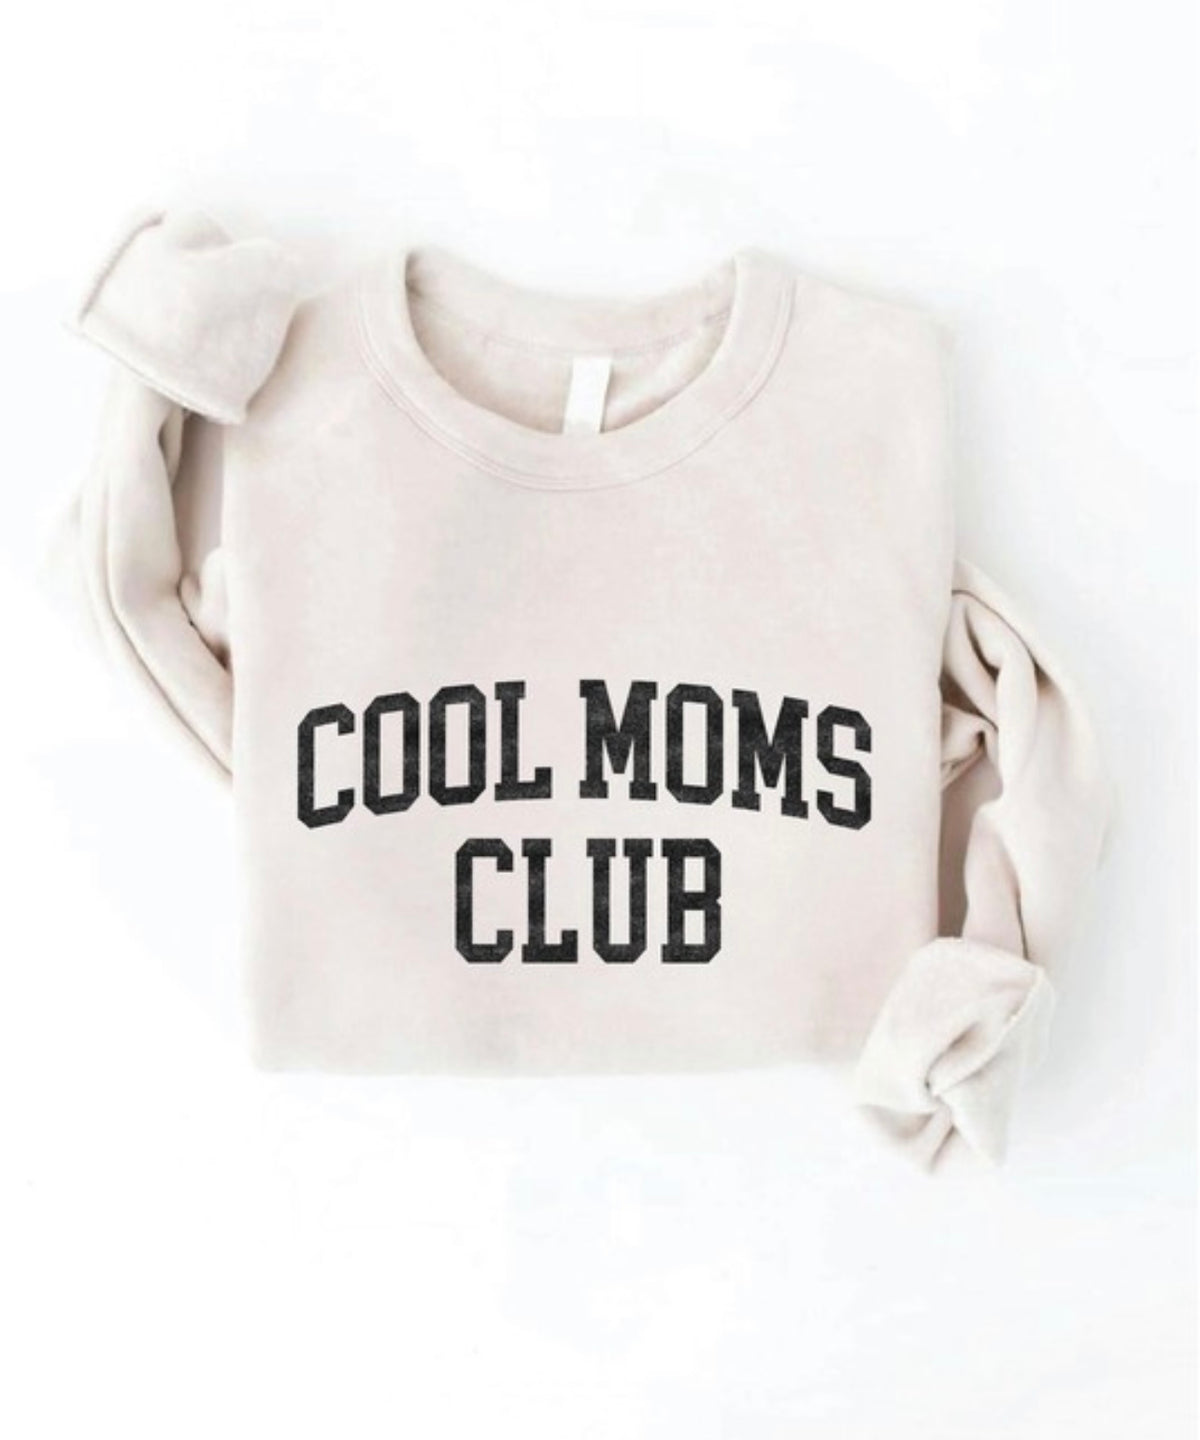 Cool moms sweatshirt in dust